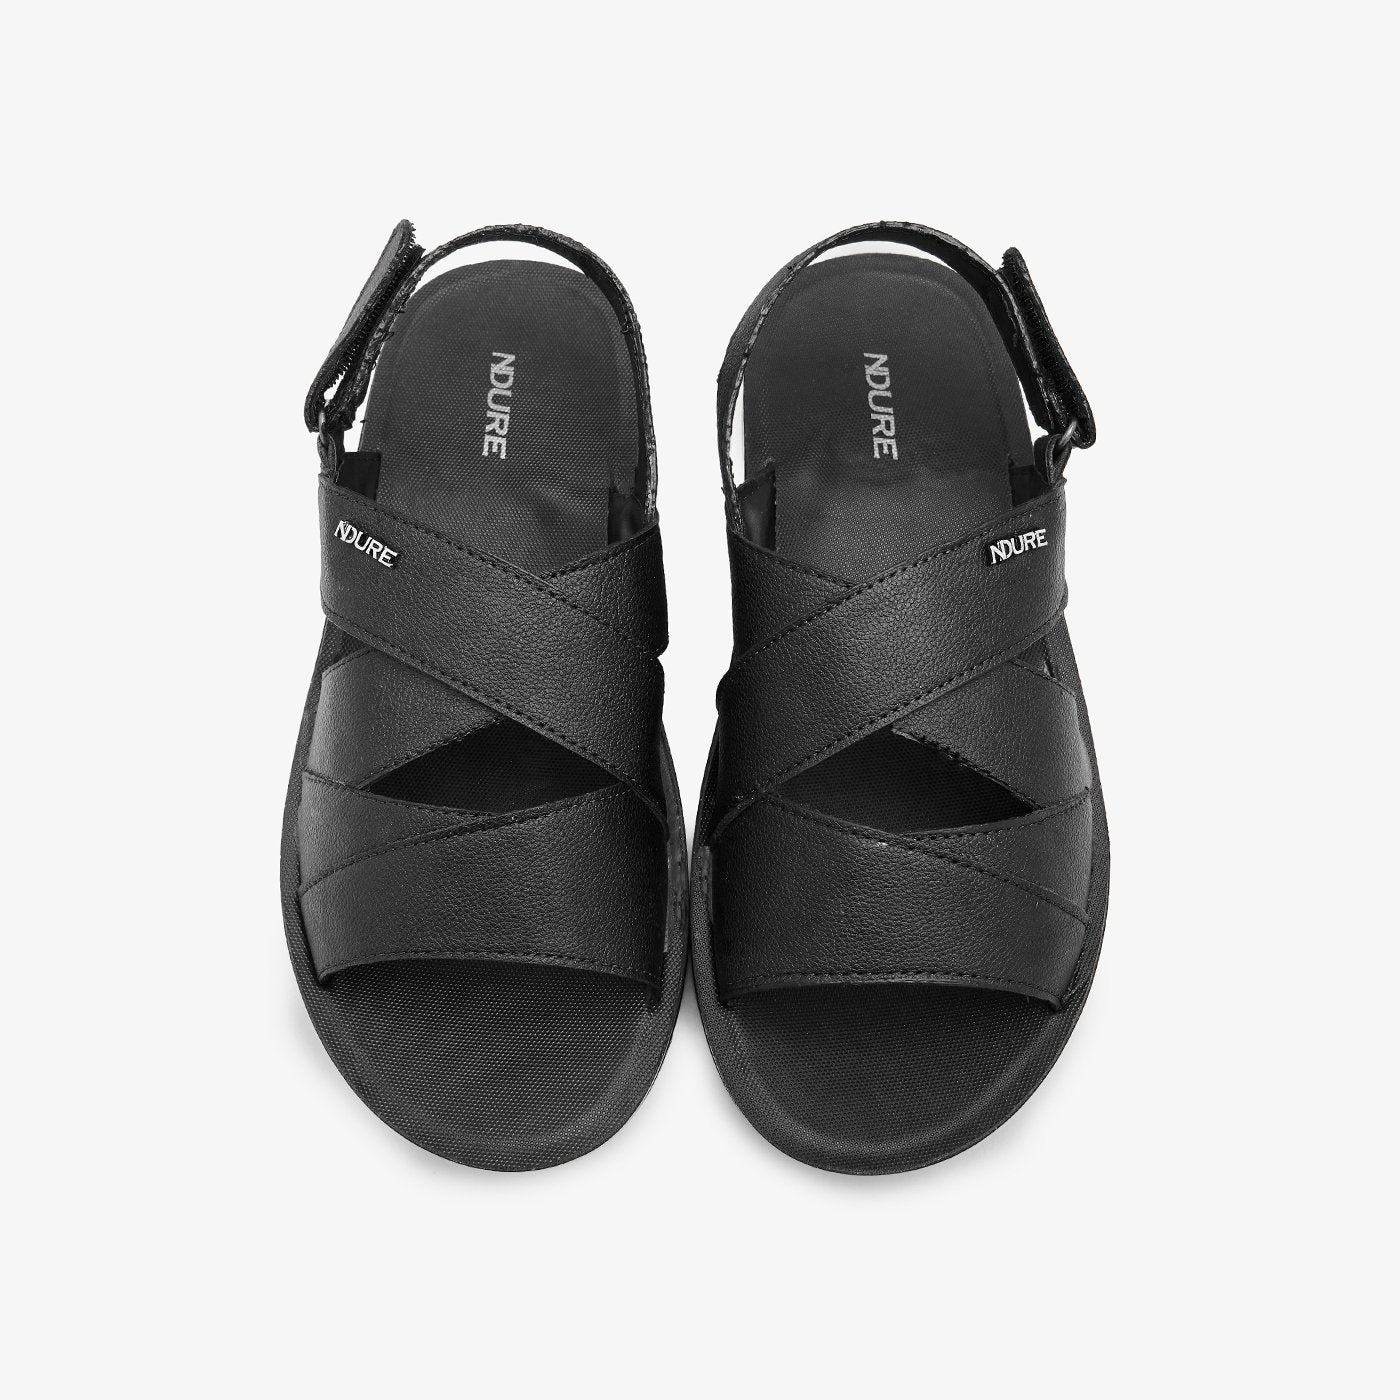 Sandals chappal for men